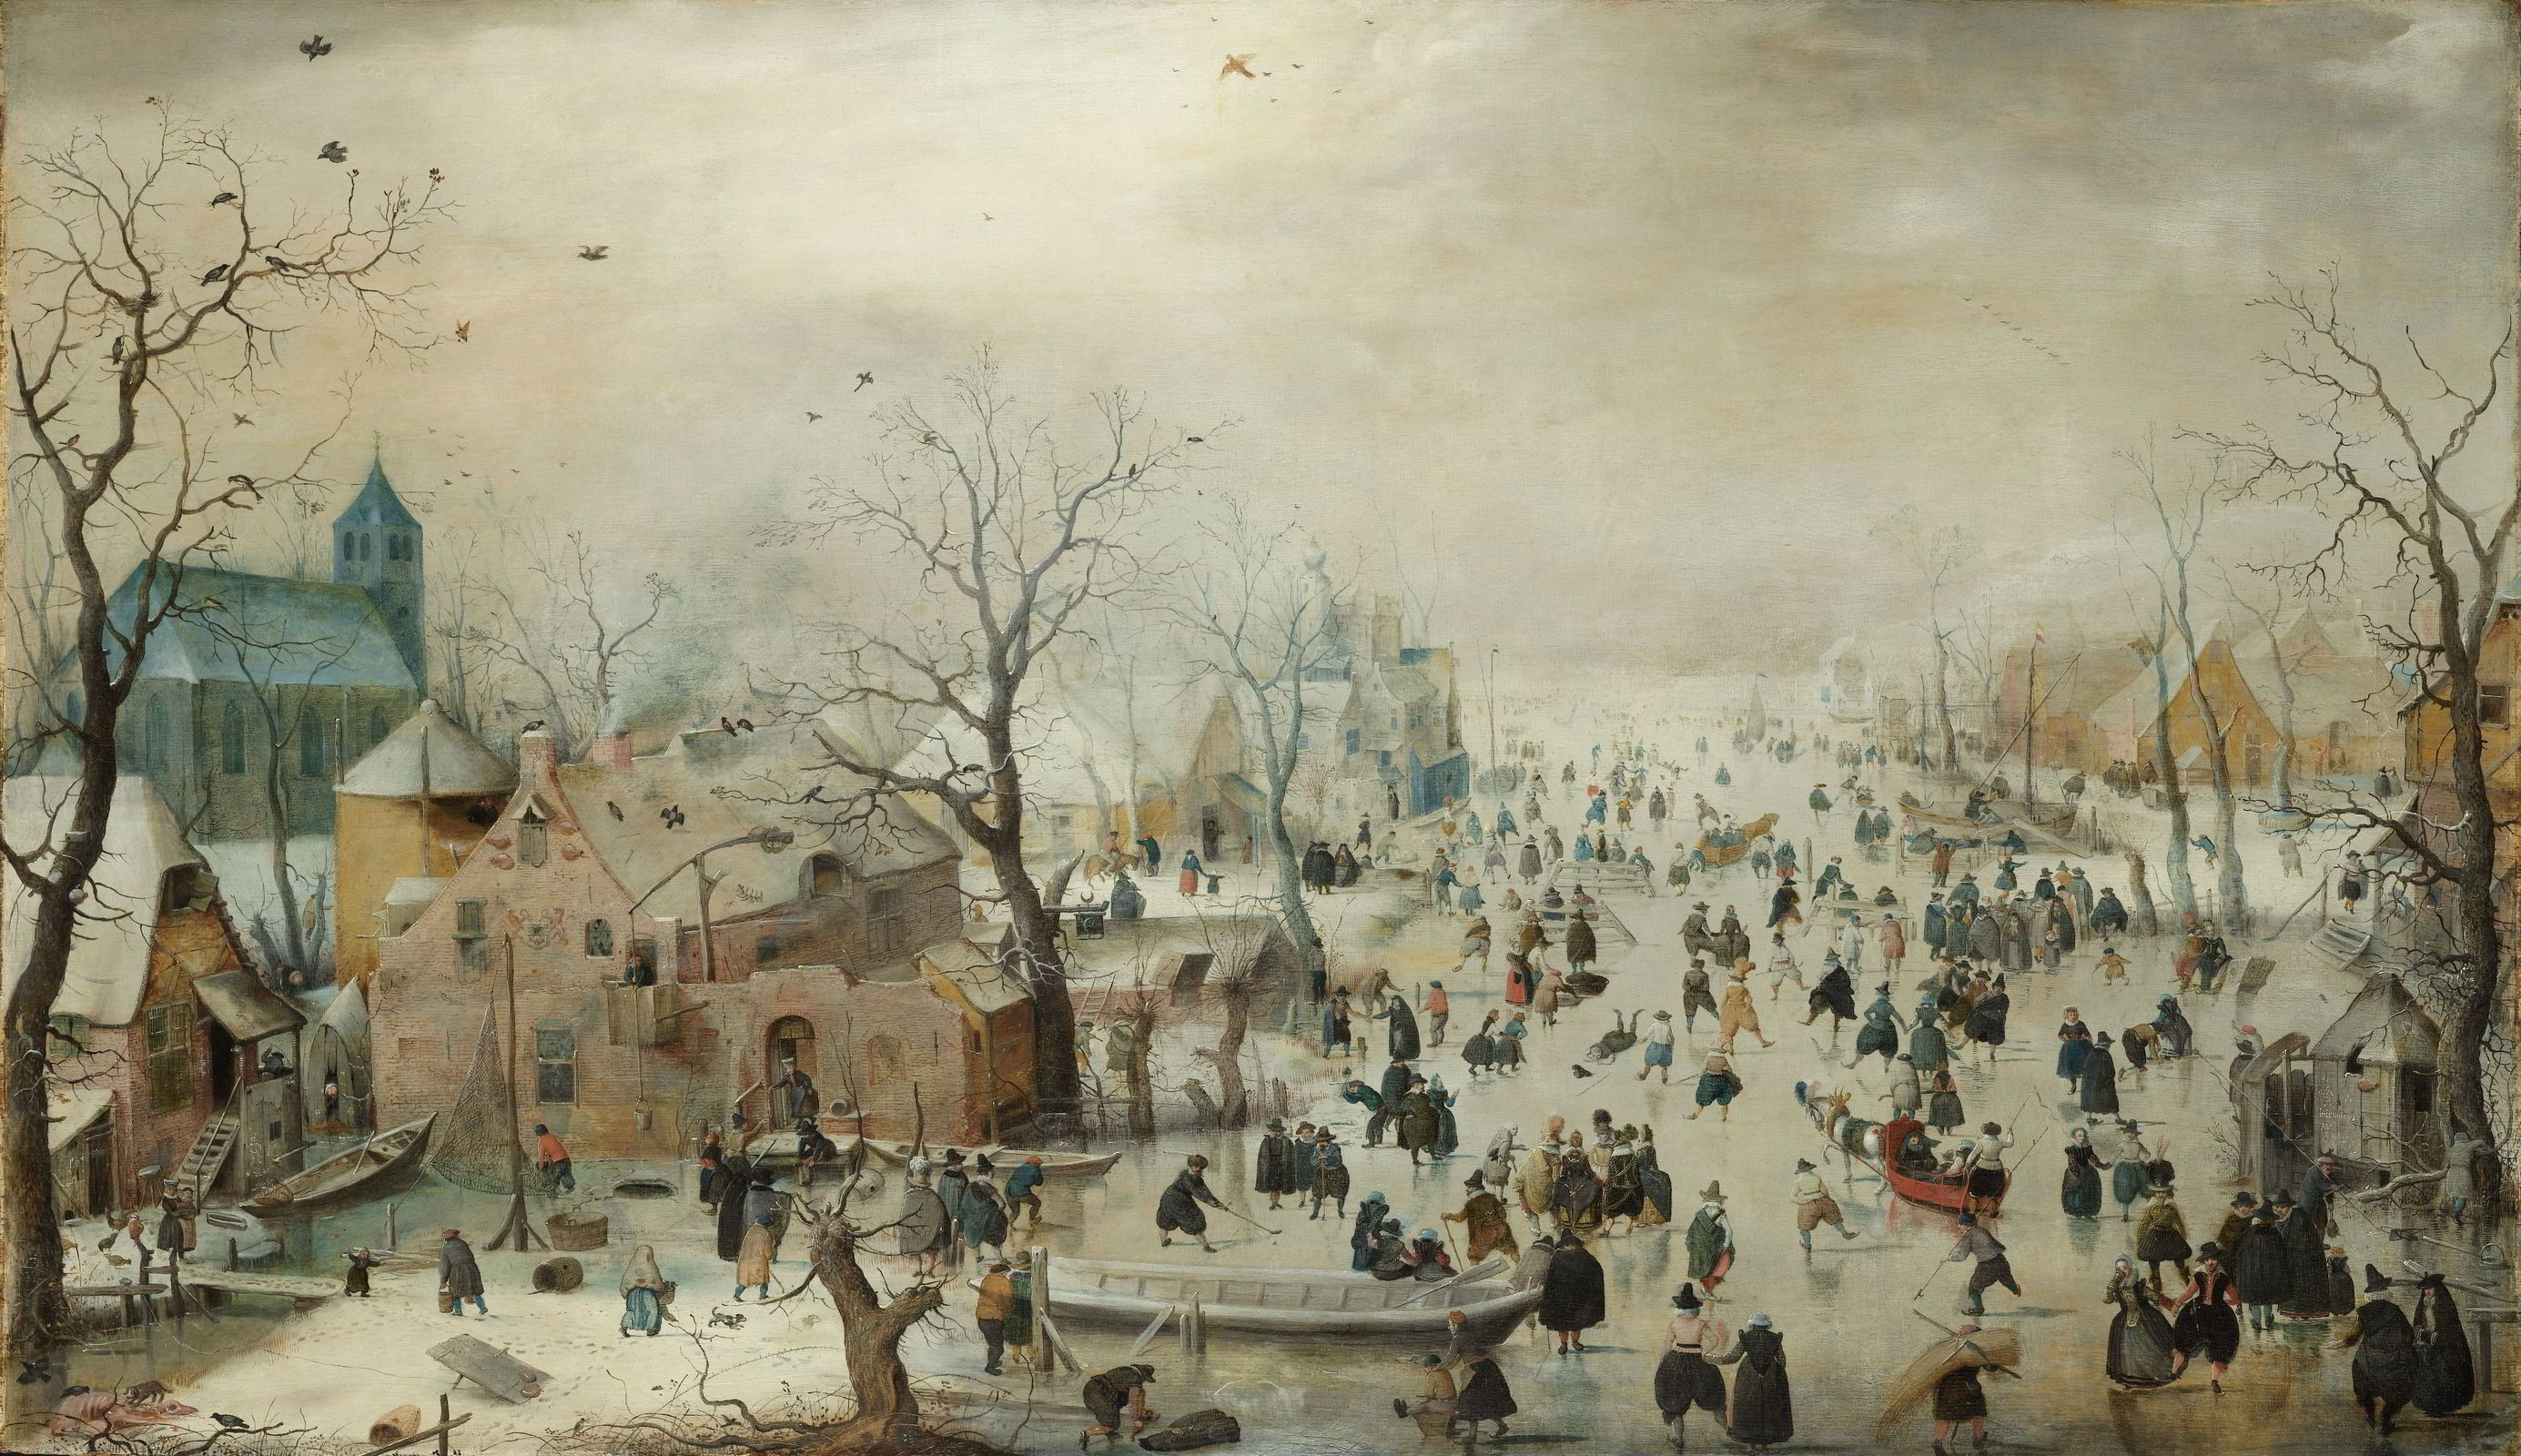 Winter Landscape by Hendrick Avercamp